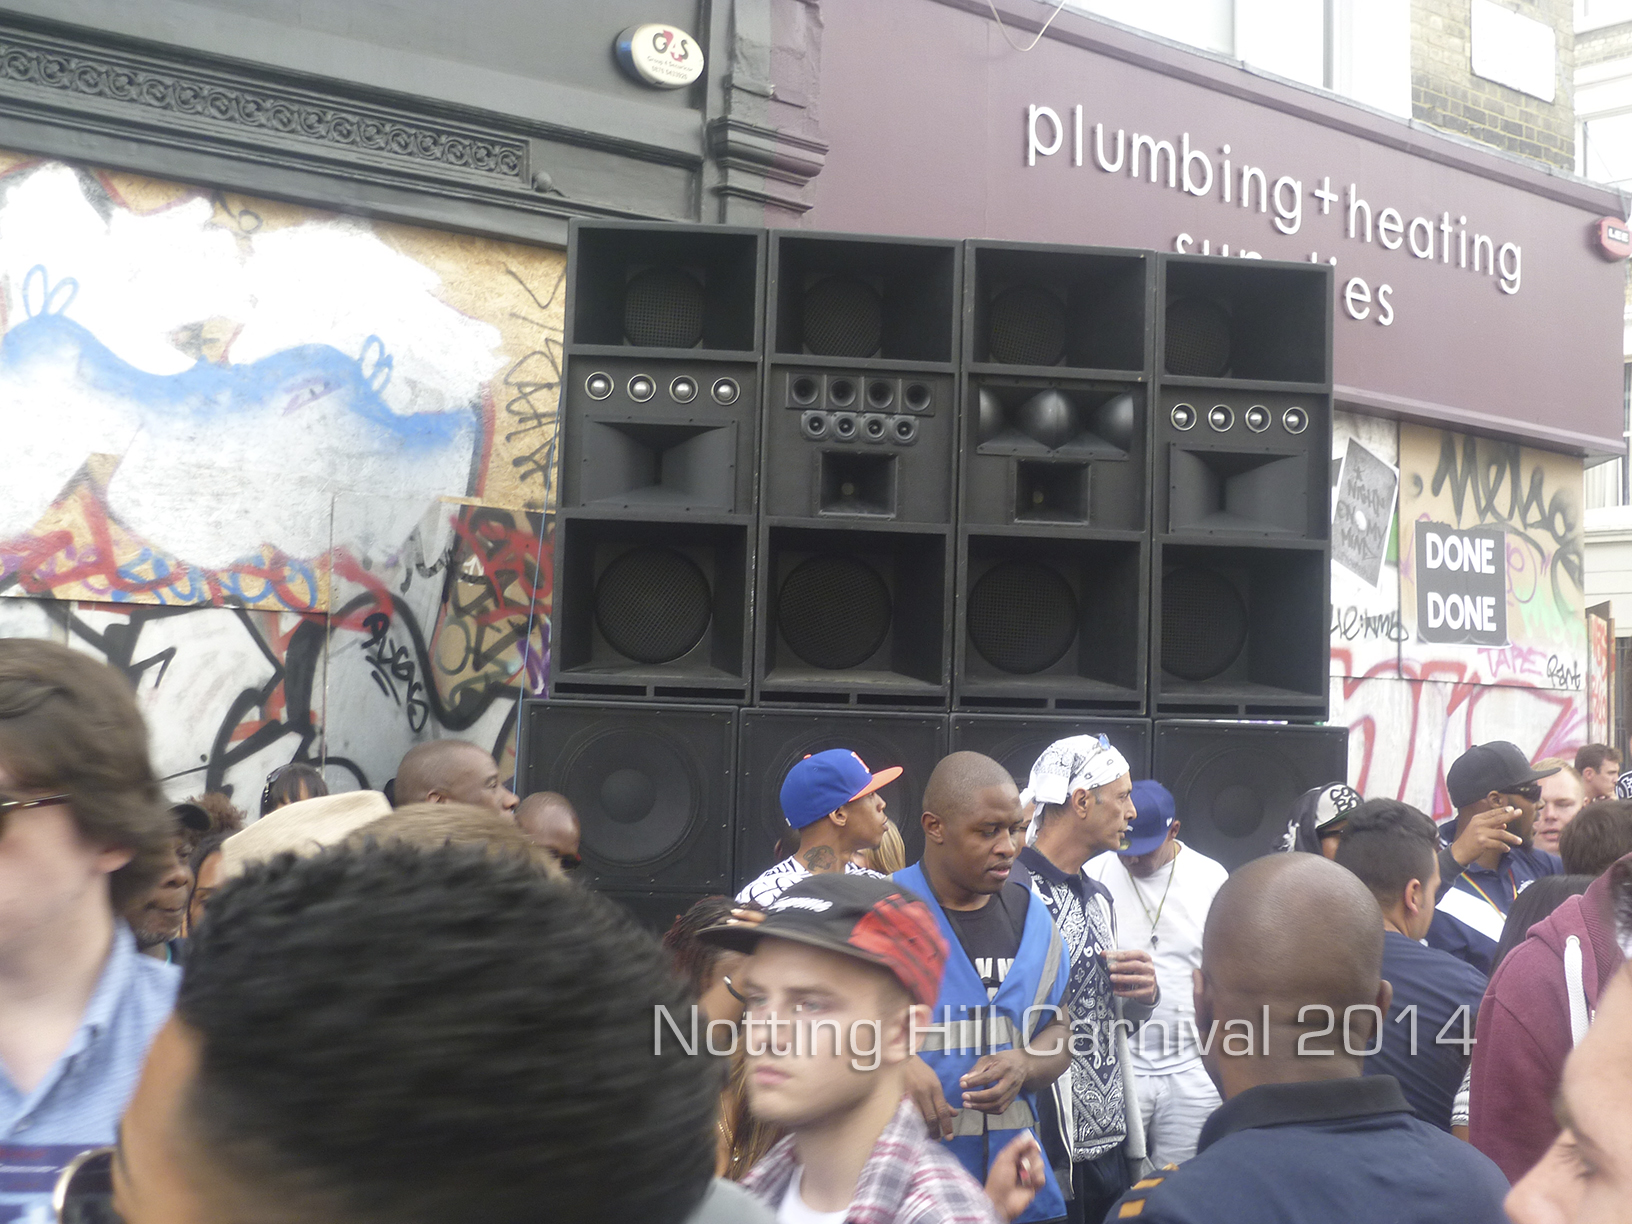 Notting-Hill-Carnival-2014-Street-Sound-System-12